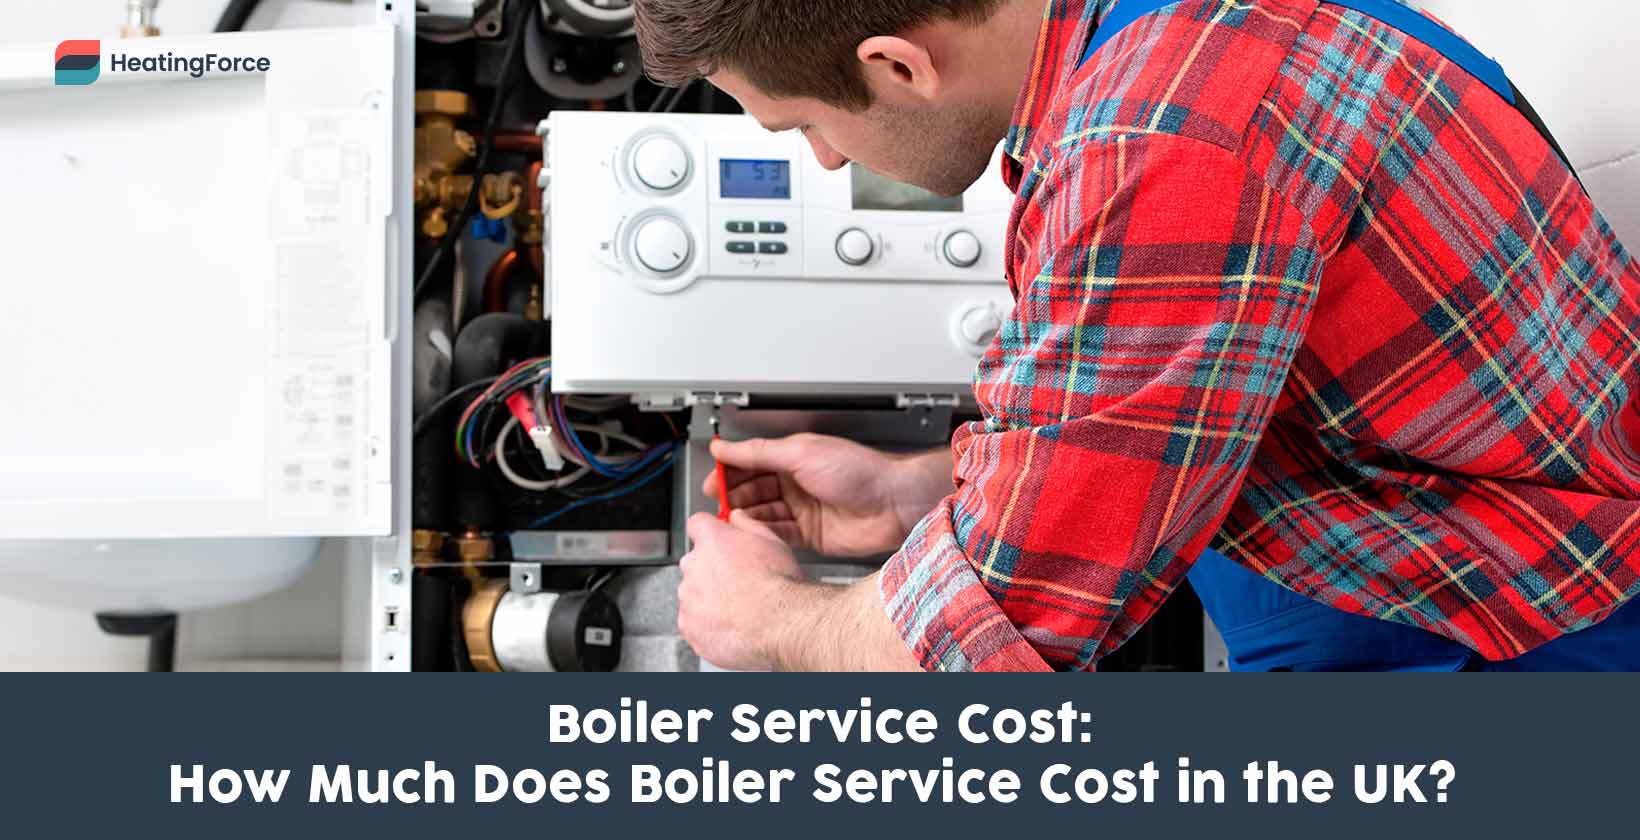 UK boiler service costs